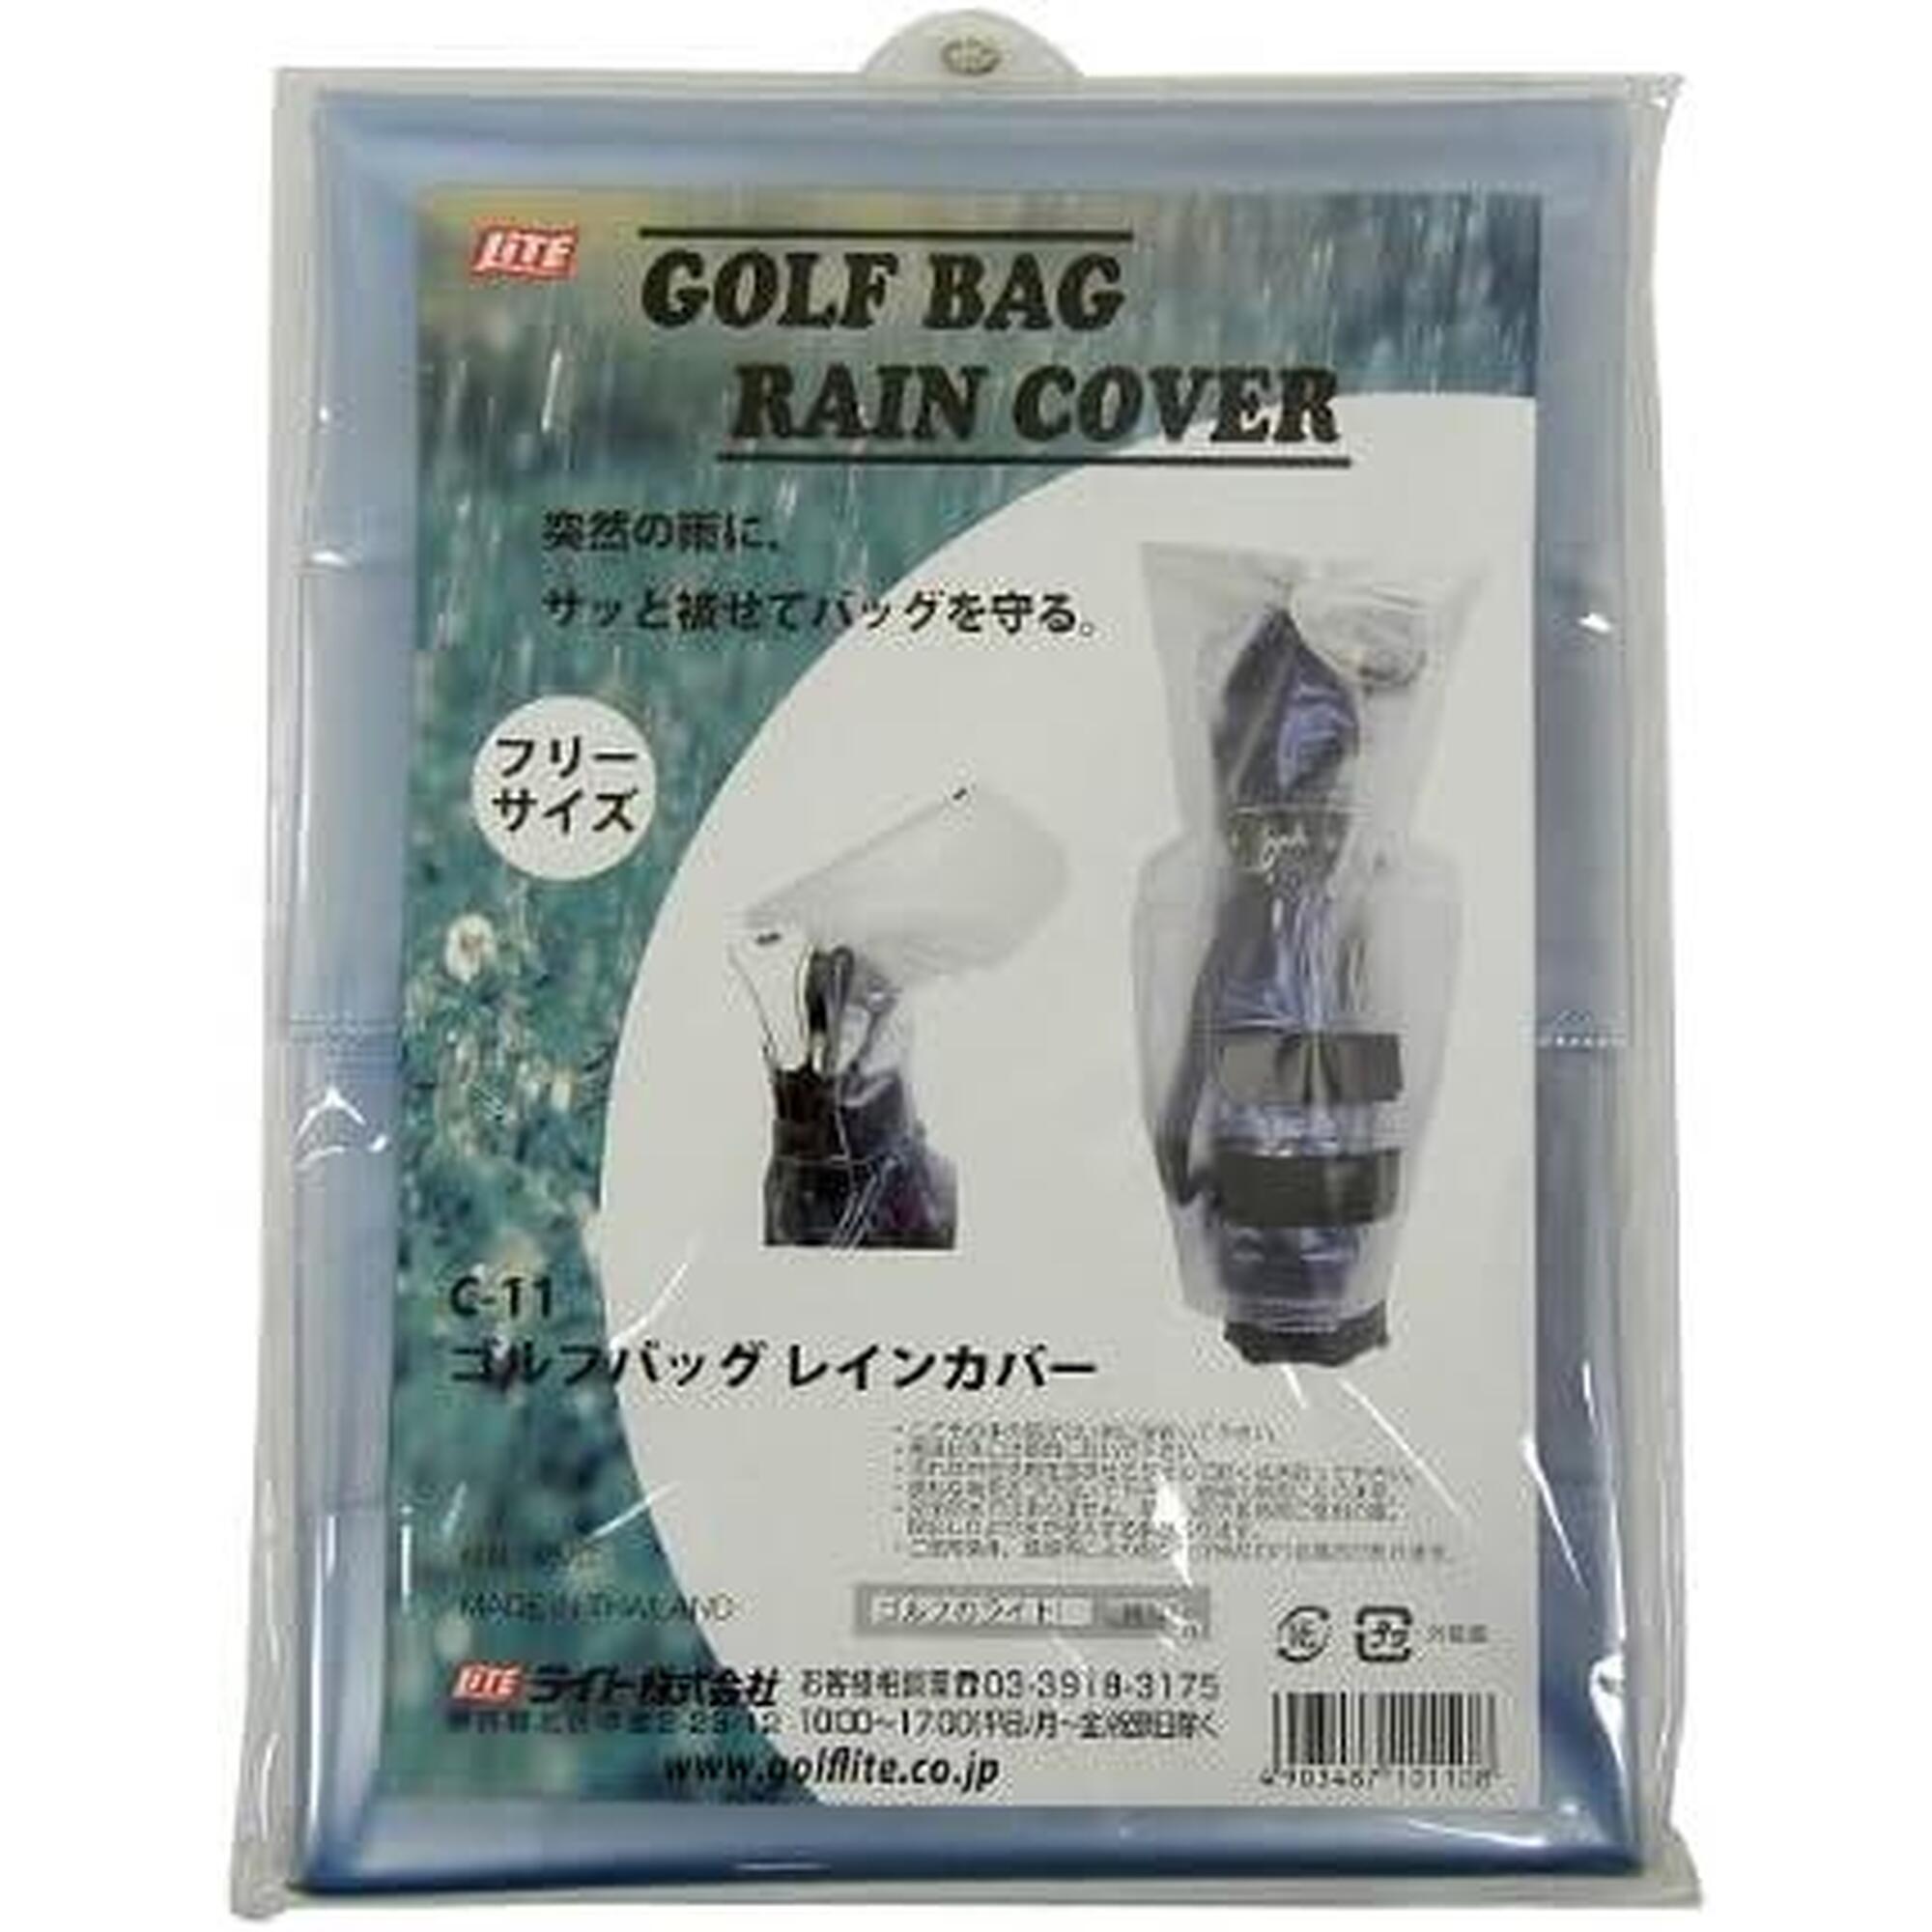 C-11 GOLF BAG RAIN COVER